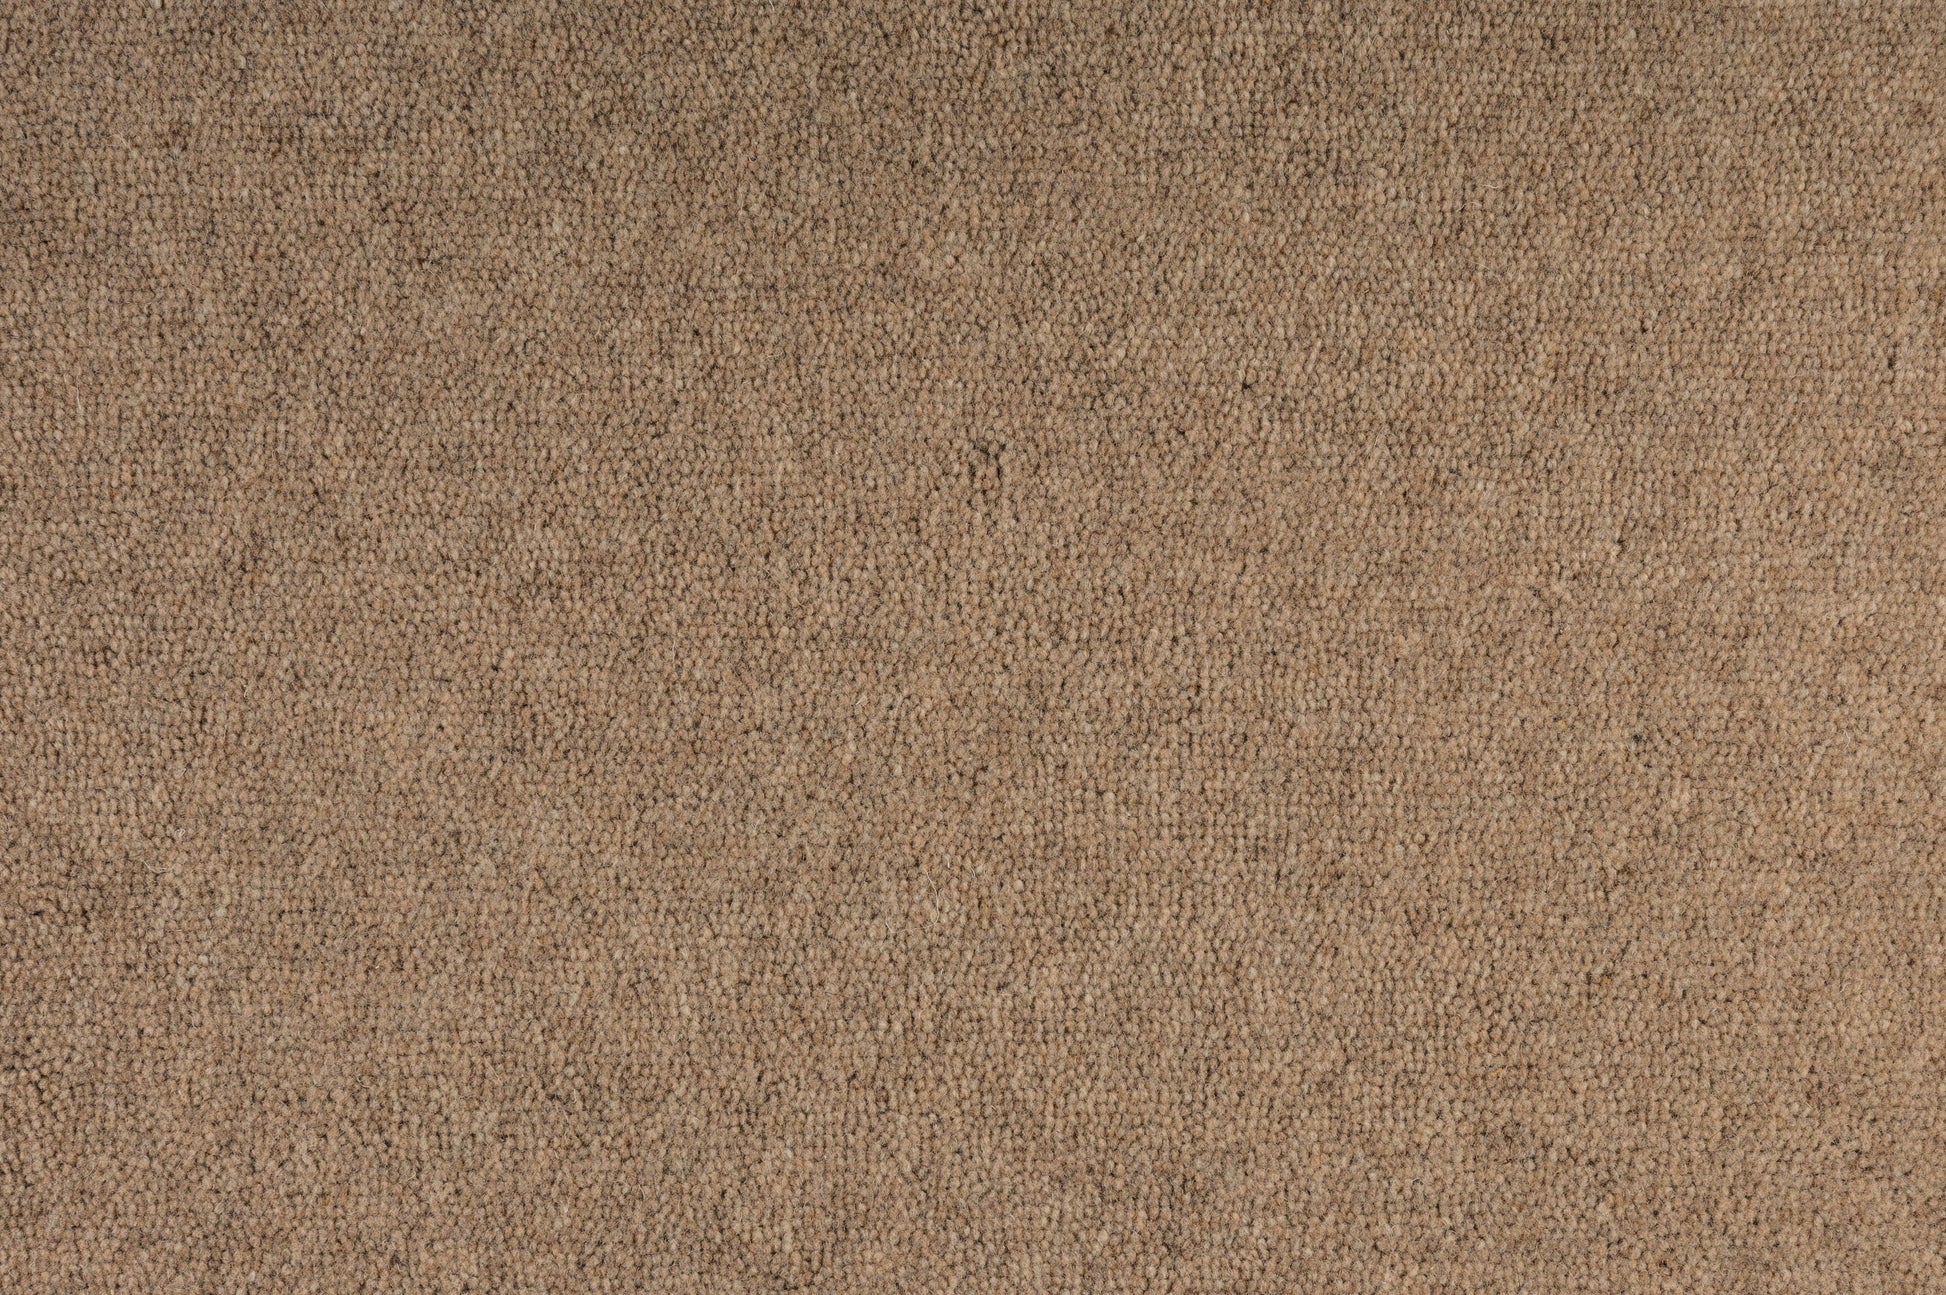 Belltower Plush Carpet